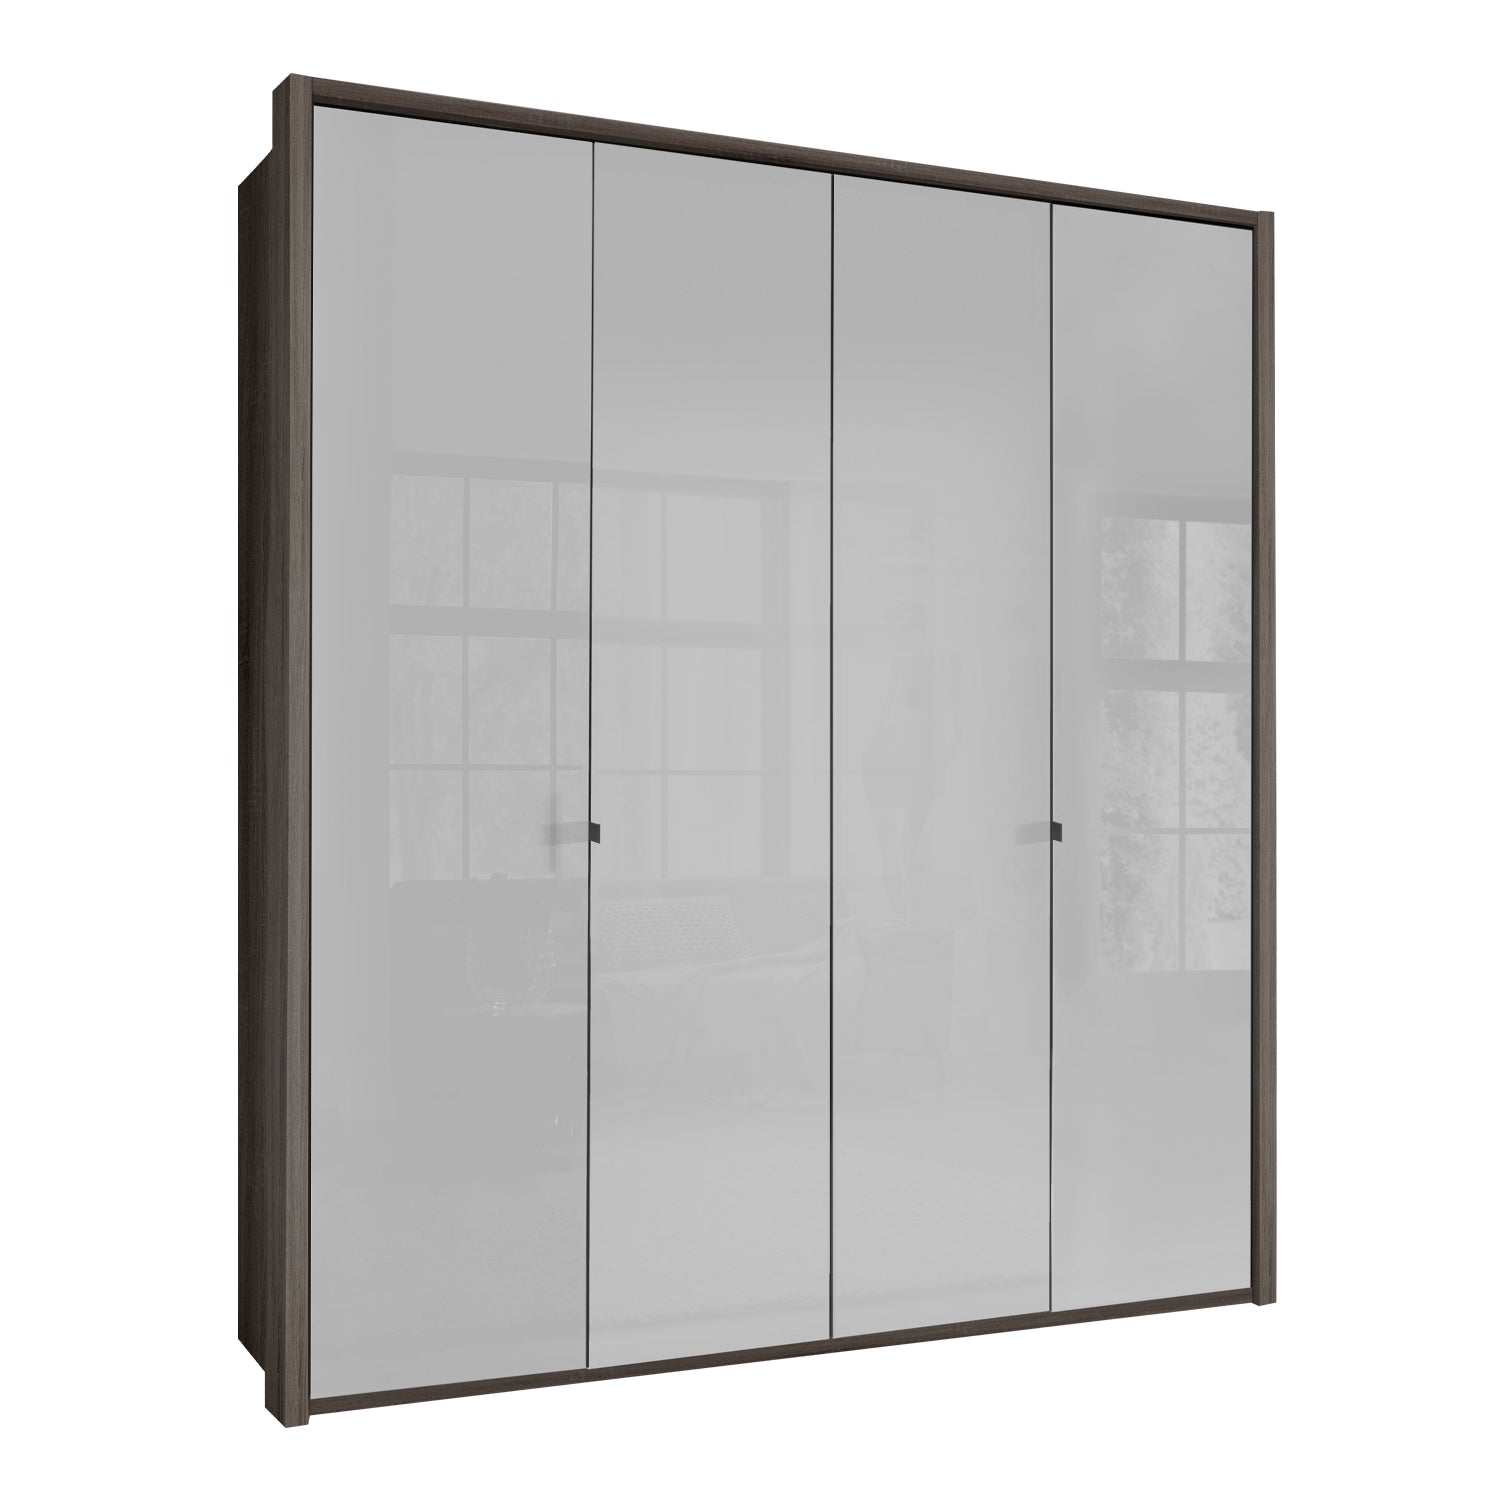 Barcelona 200cm Wardrobe With Glass Doors - White Glass